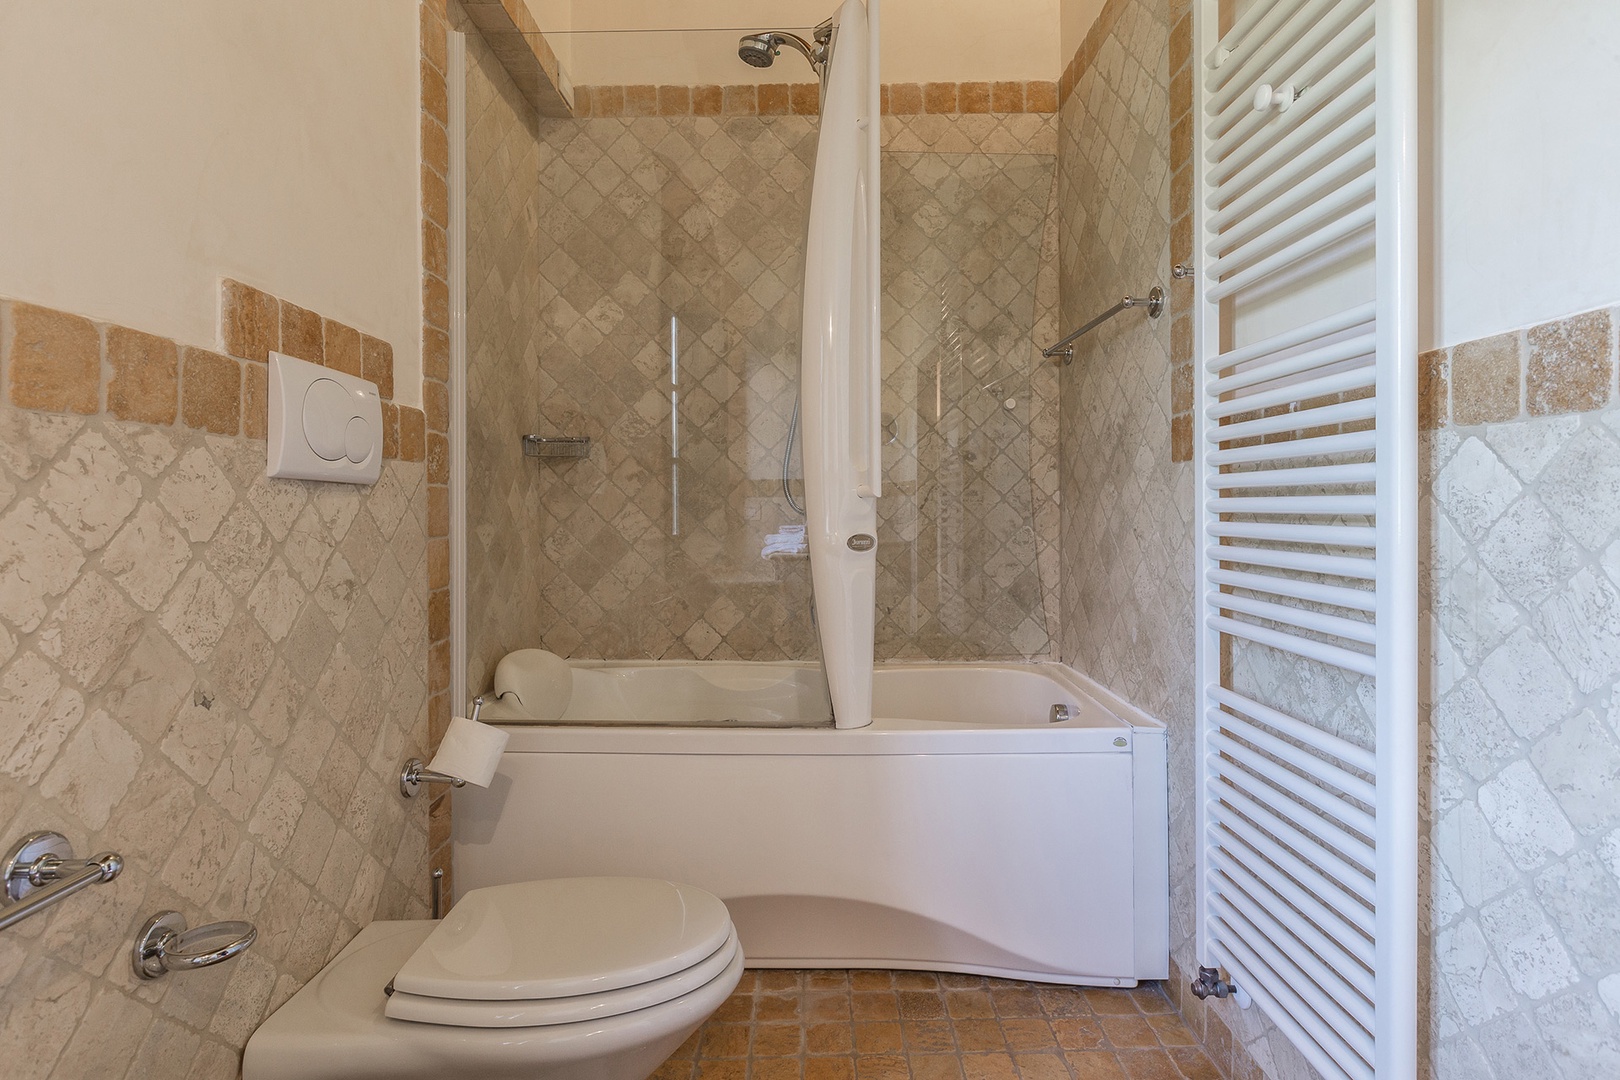 En suite bathroom to bedroom 1 features a jacuzzi bathtub and shower.